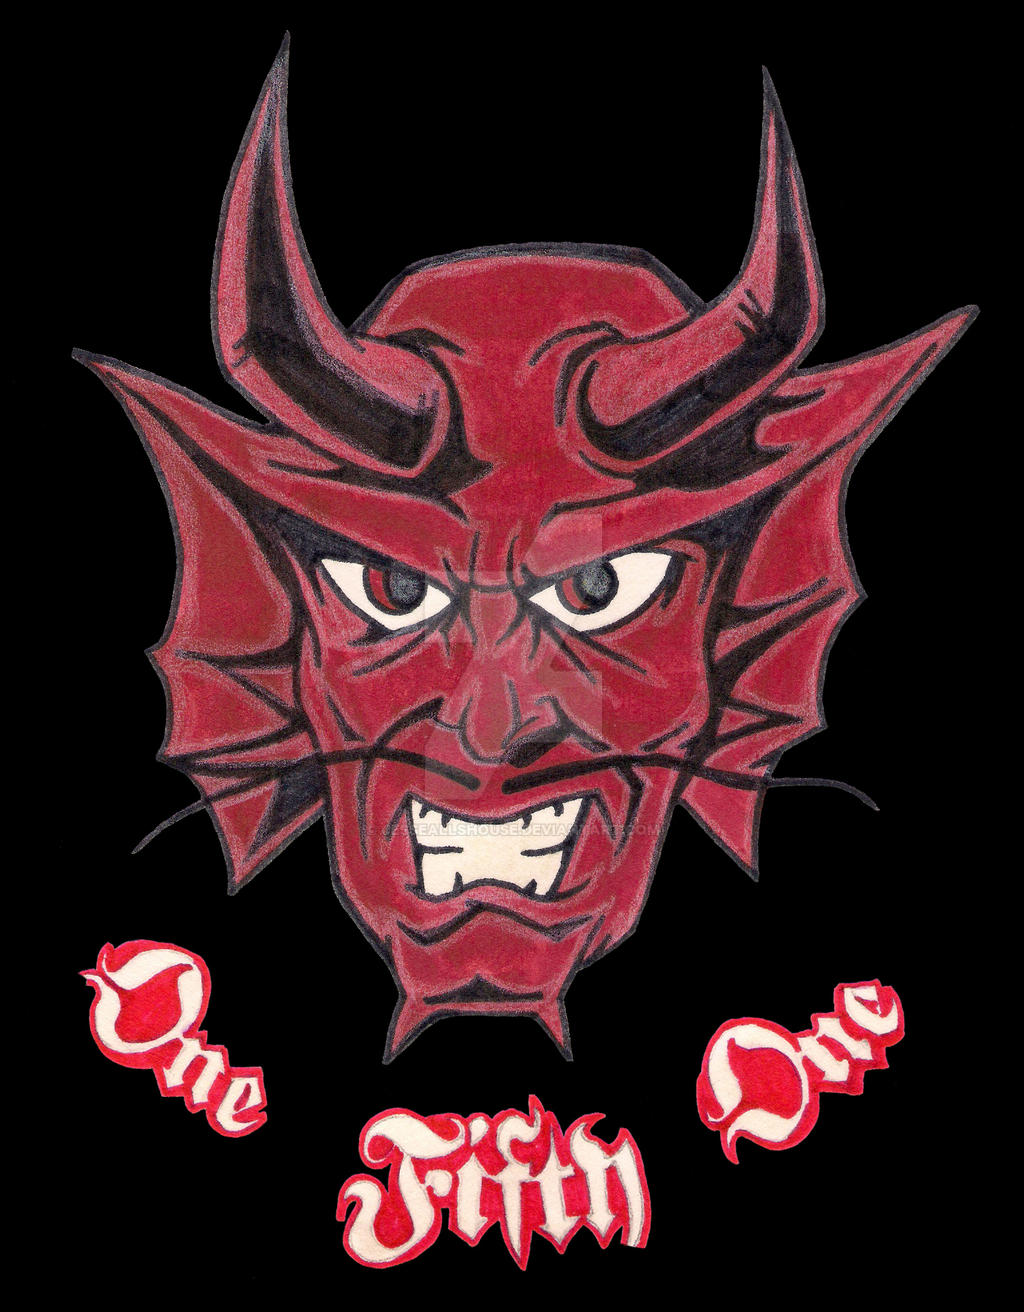 one_fifty_one_devil_logo_by_jesseallshouse-d6qep4l.jpg